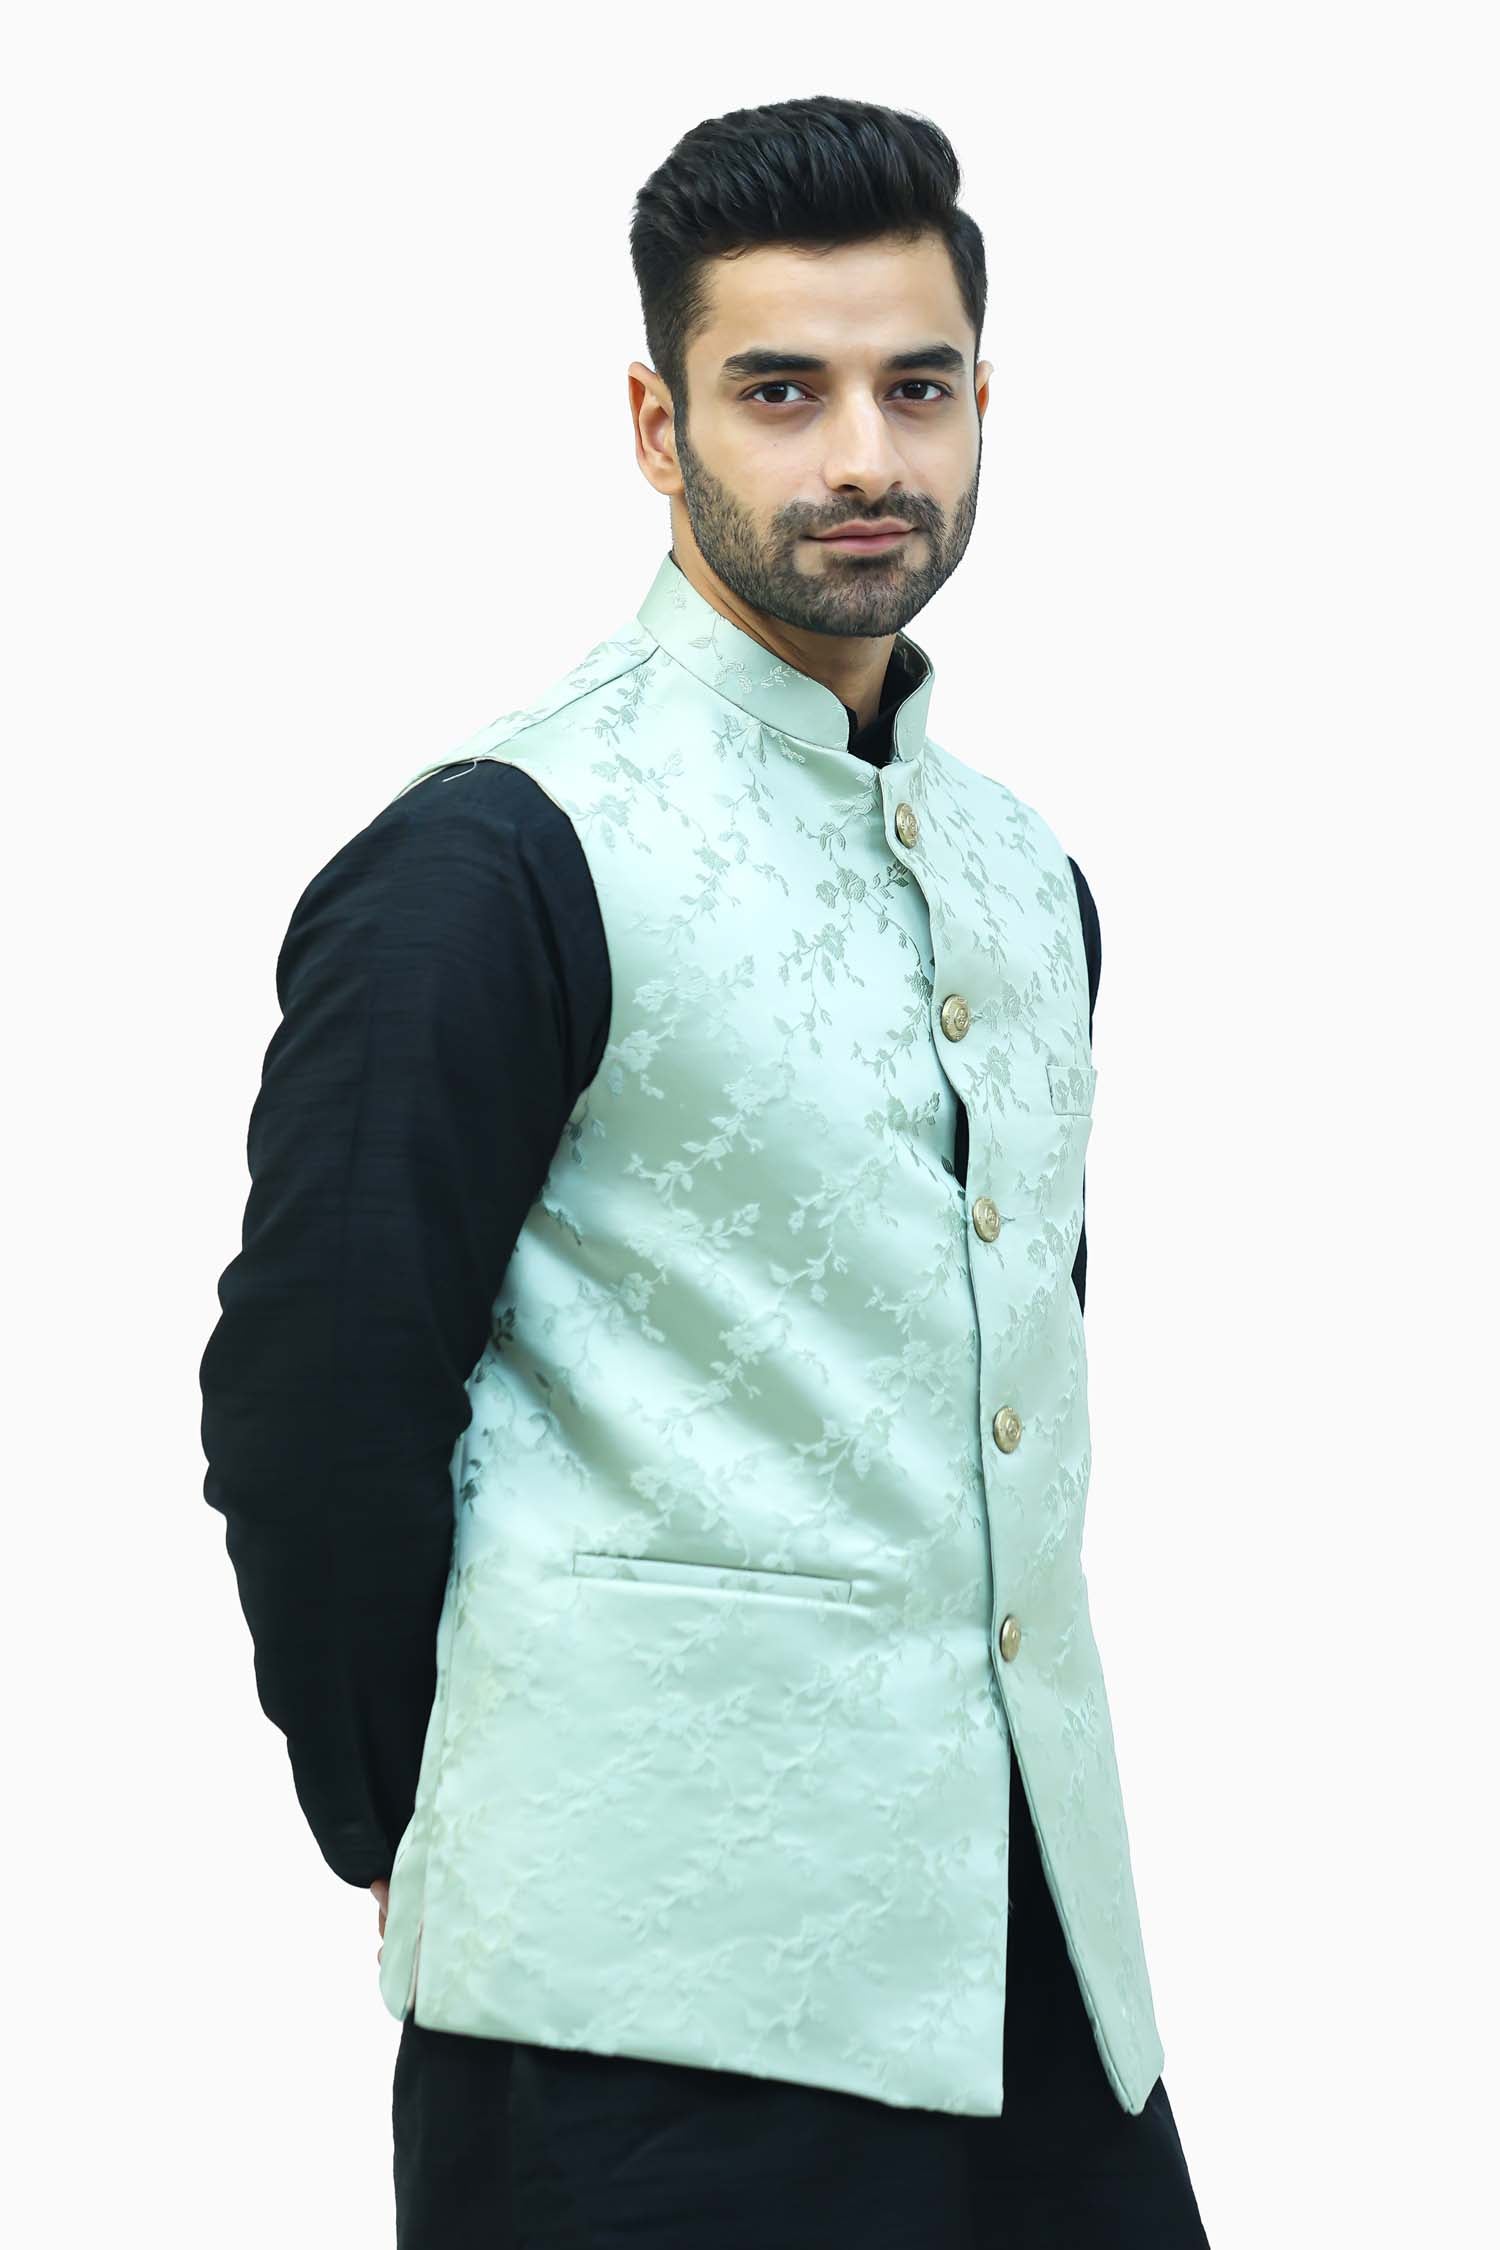 Green Waistcoat For Men - Veshbhoshaa